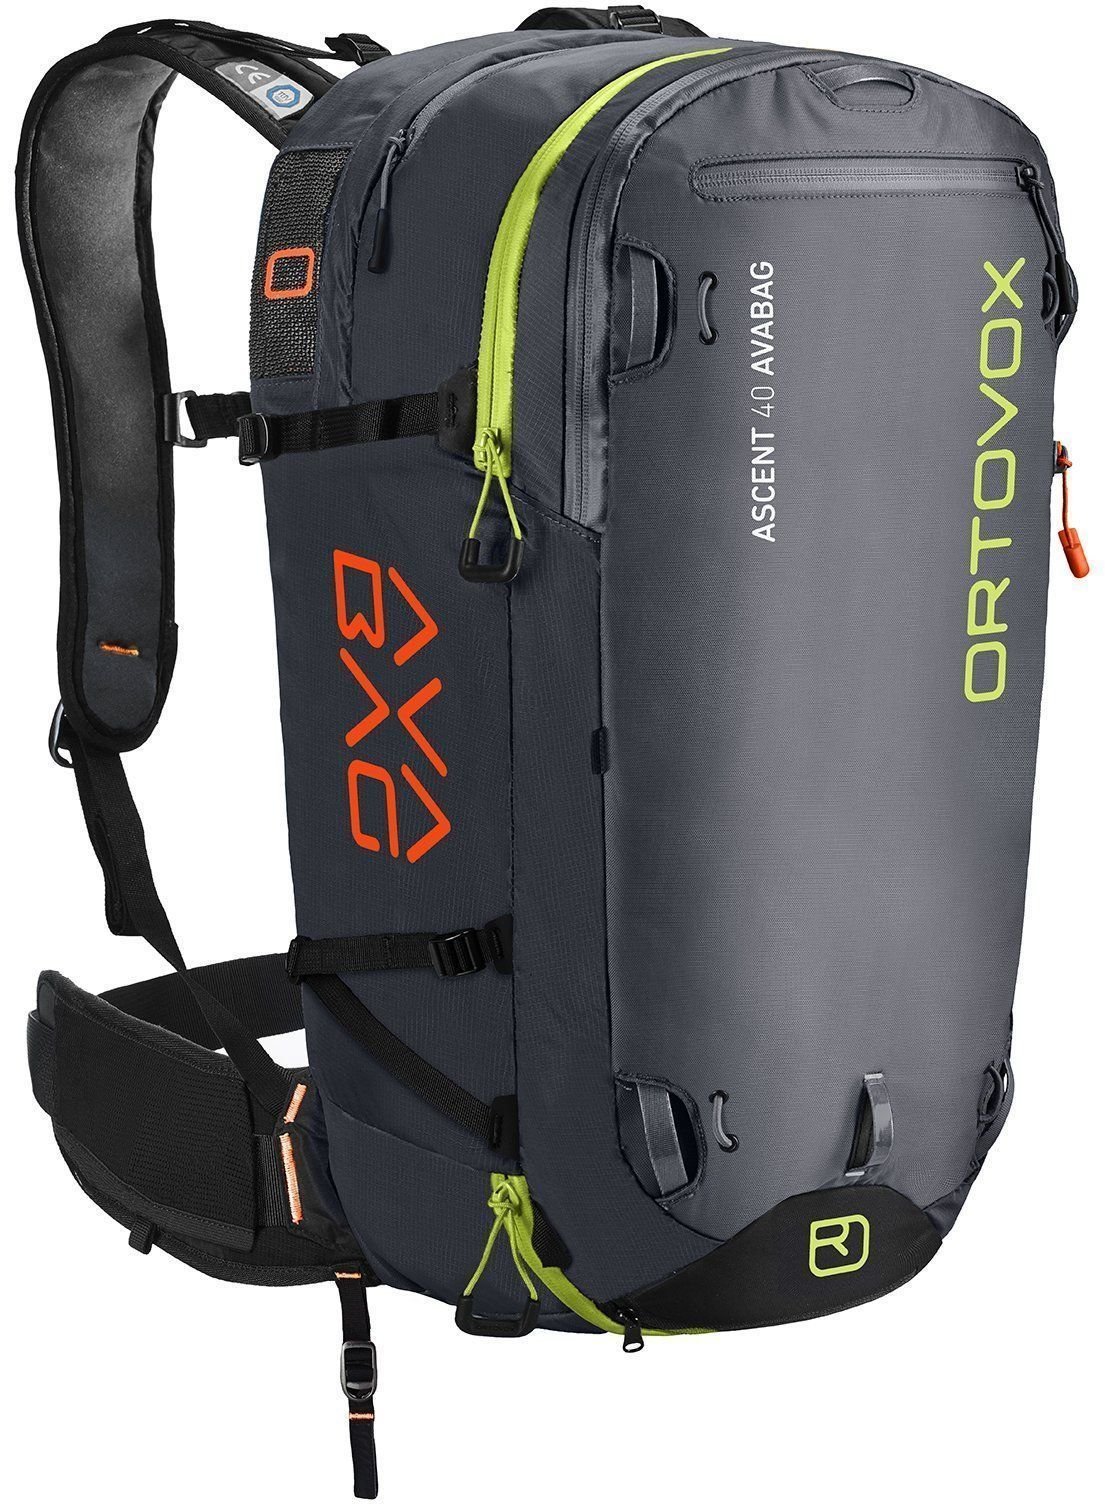 Ski Travel Bag Ortovox Ascent 40 Avabag Black Anthracite Ski Travel Bag